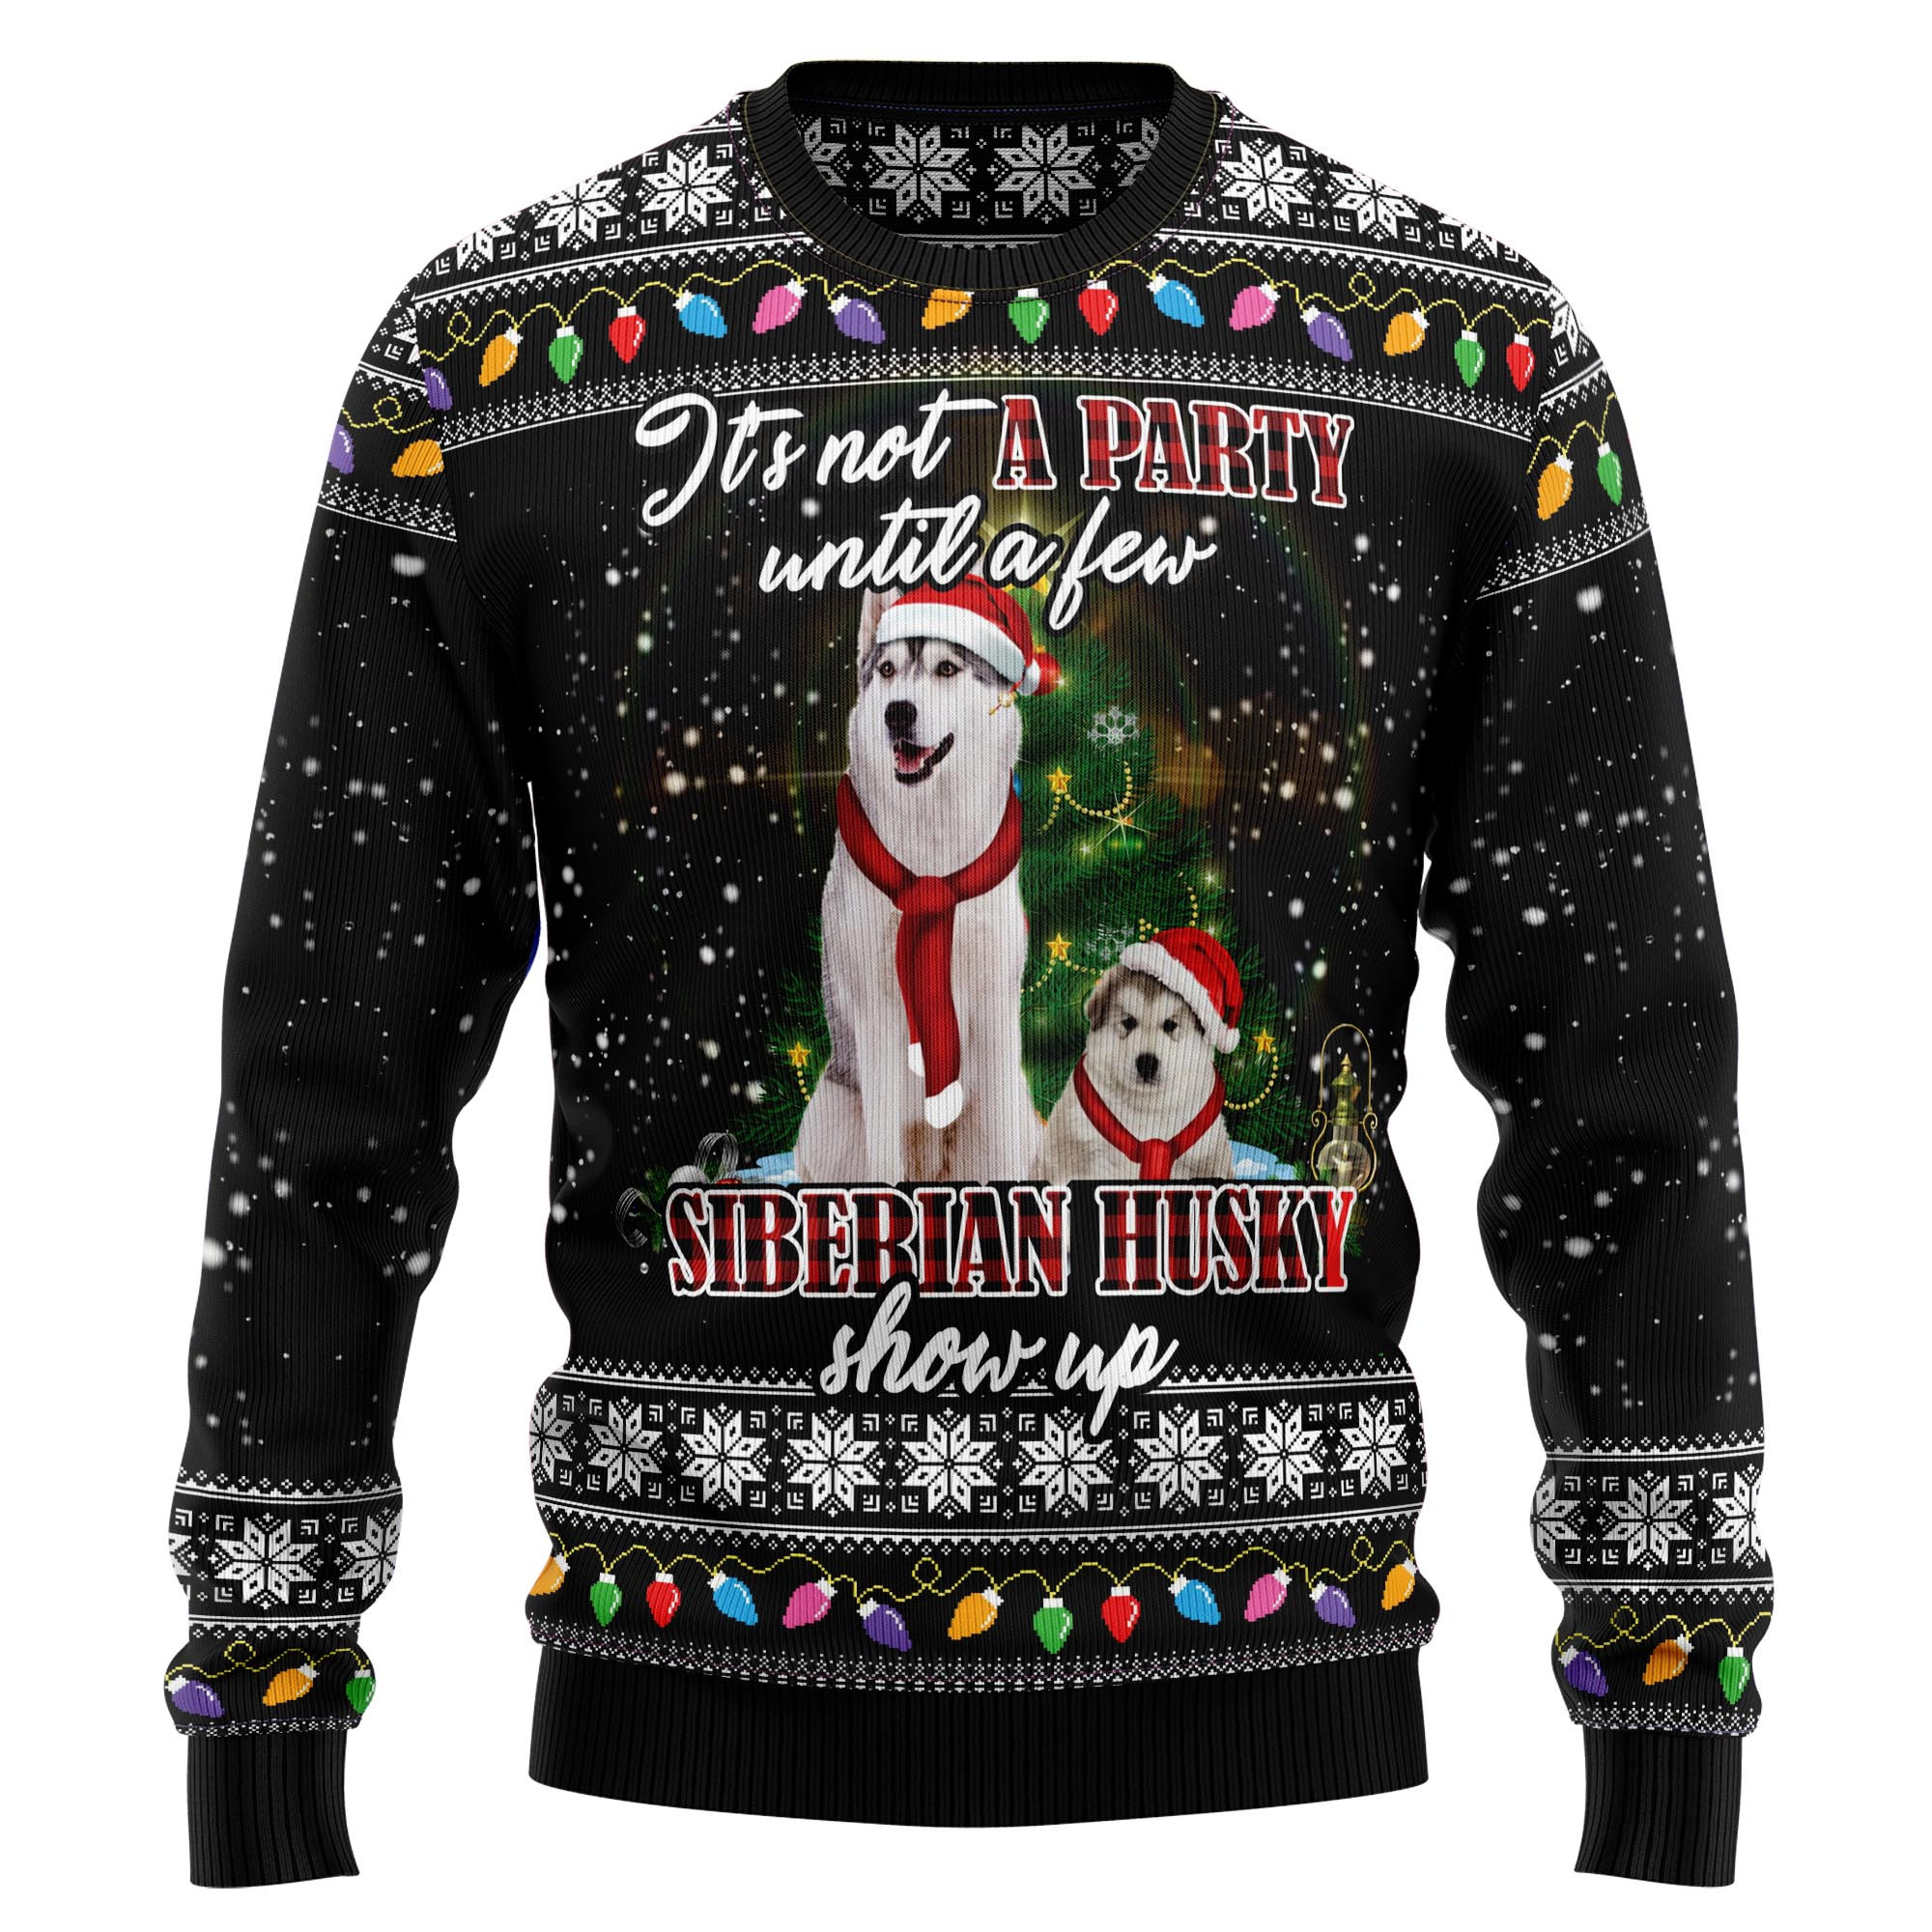 Siberian Husky Show Up Ugly Christmas Sweater